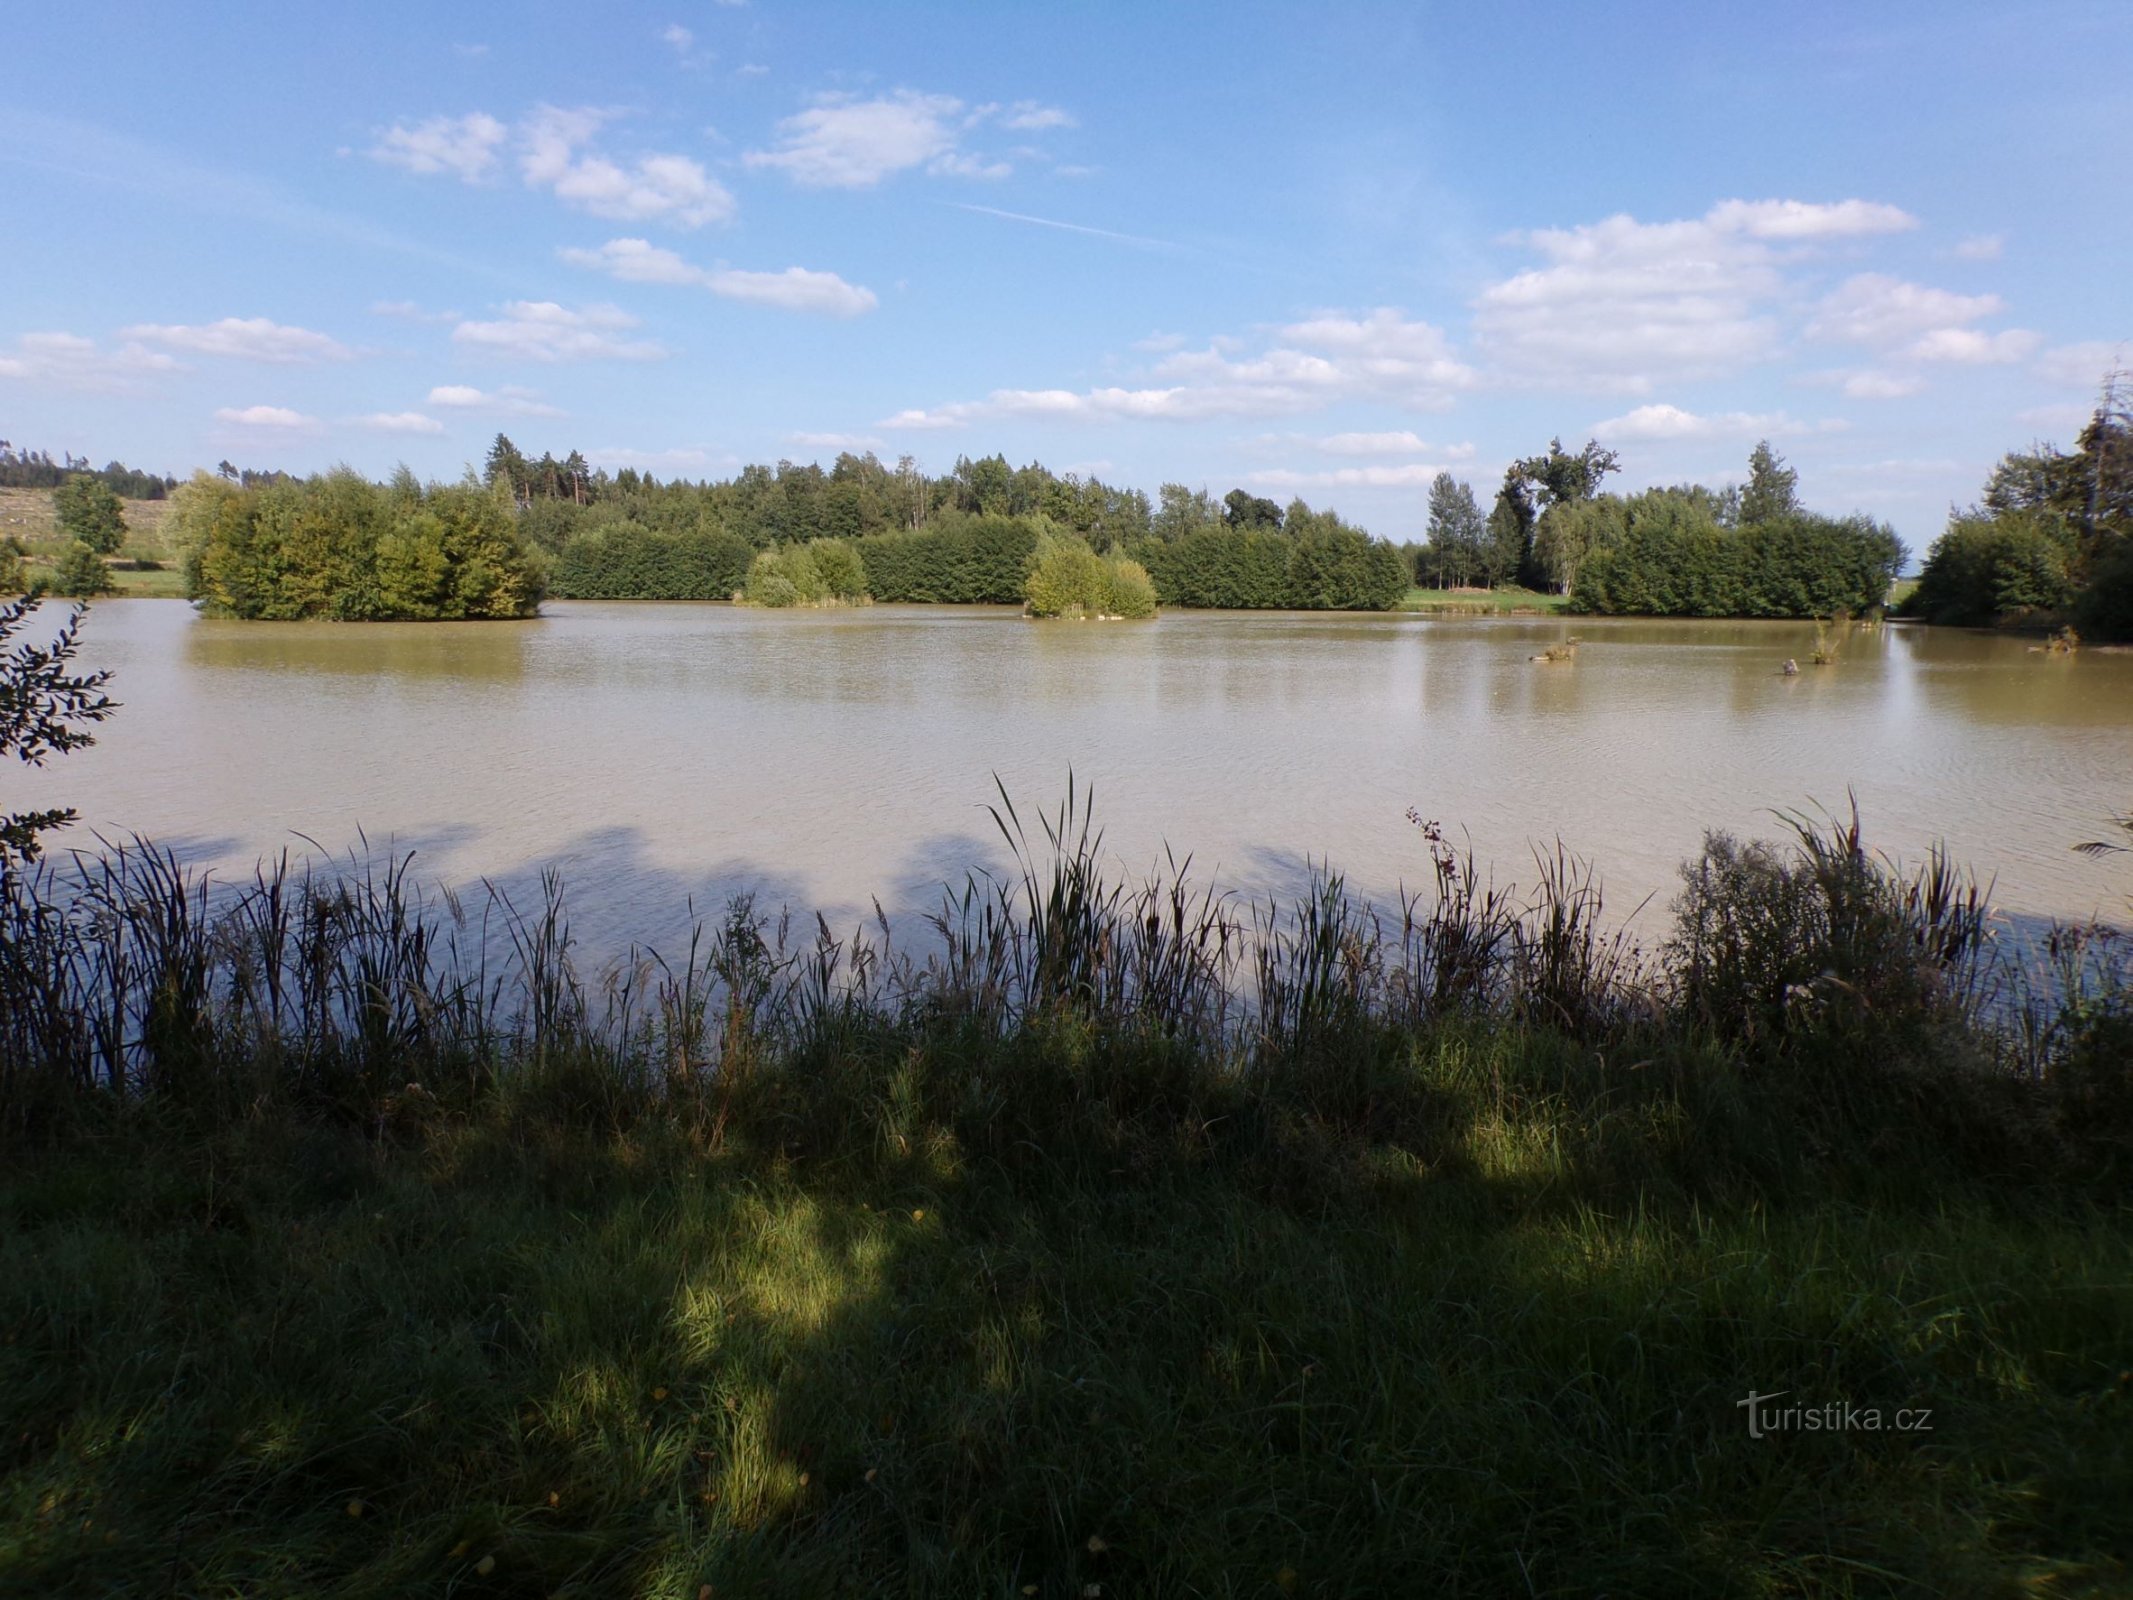 Chmelařův rybník (Mezilečí、8.9.2021 年 XNUMX 月 XNUMX 日)